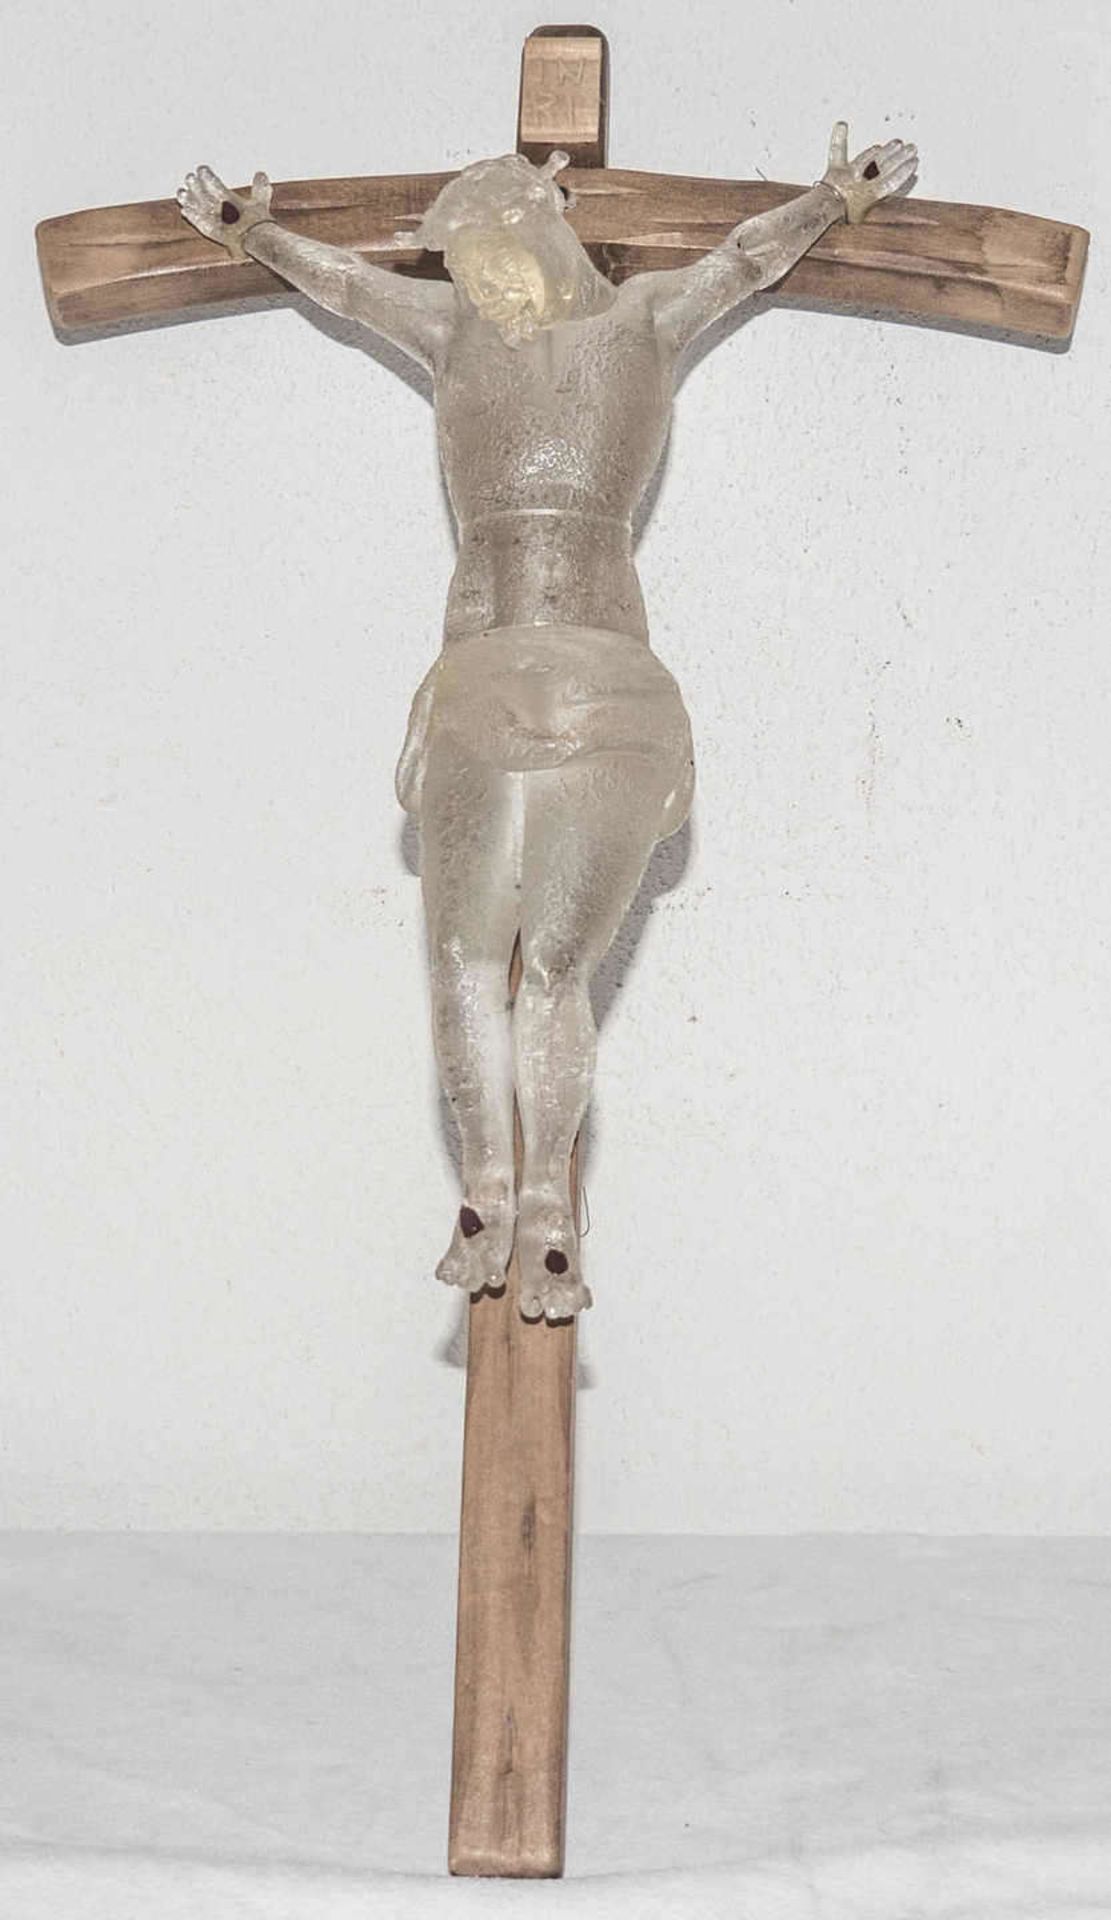 INRI, Holzkreuz mit Christuskörper aus Glas. Höhe ca. 50 cm. INRI, wooden cross with the body of